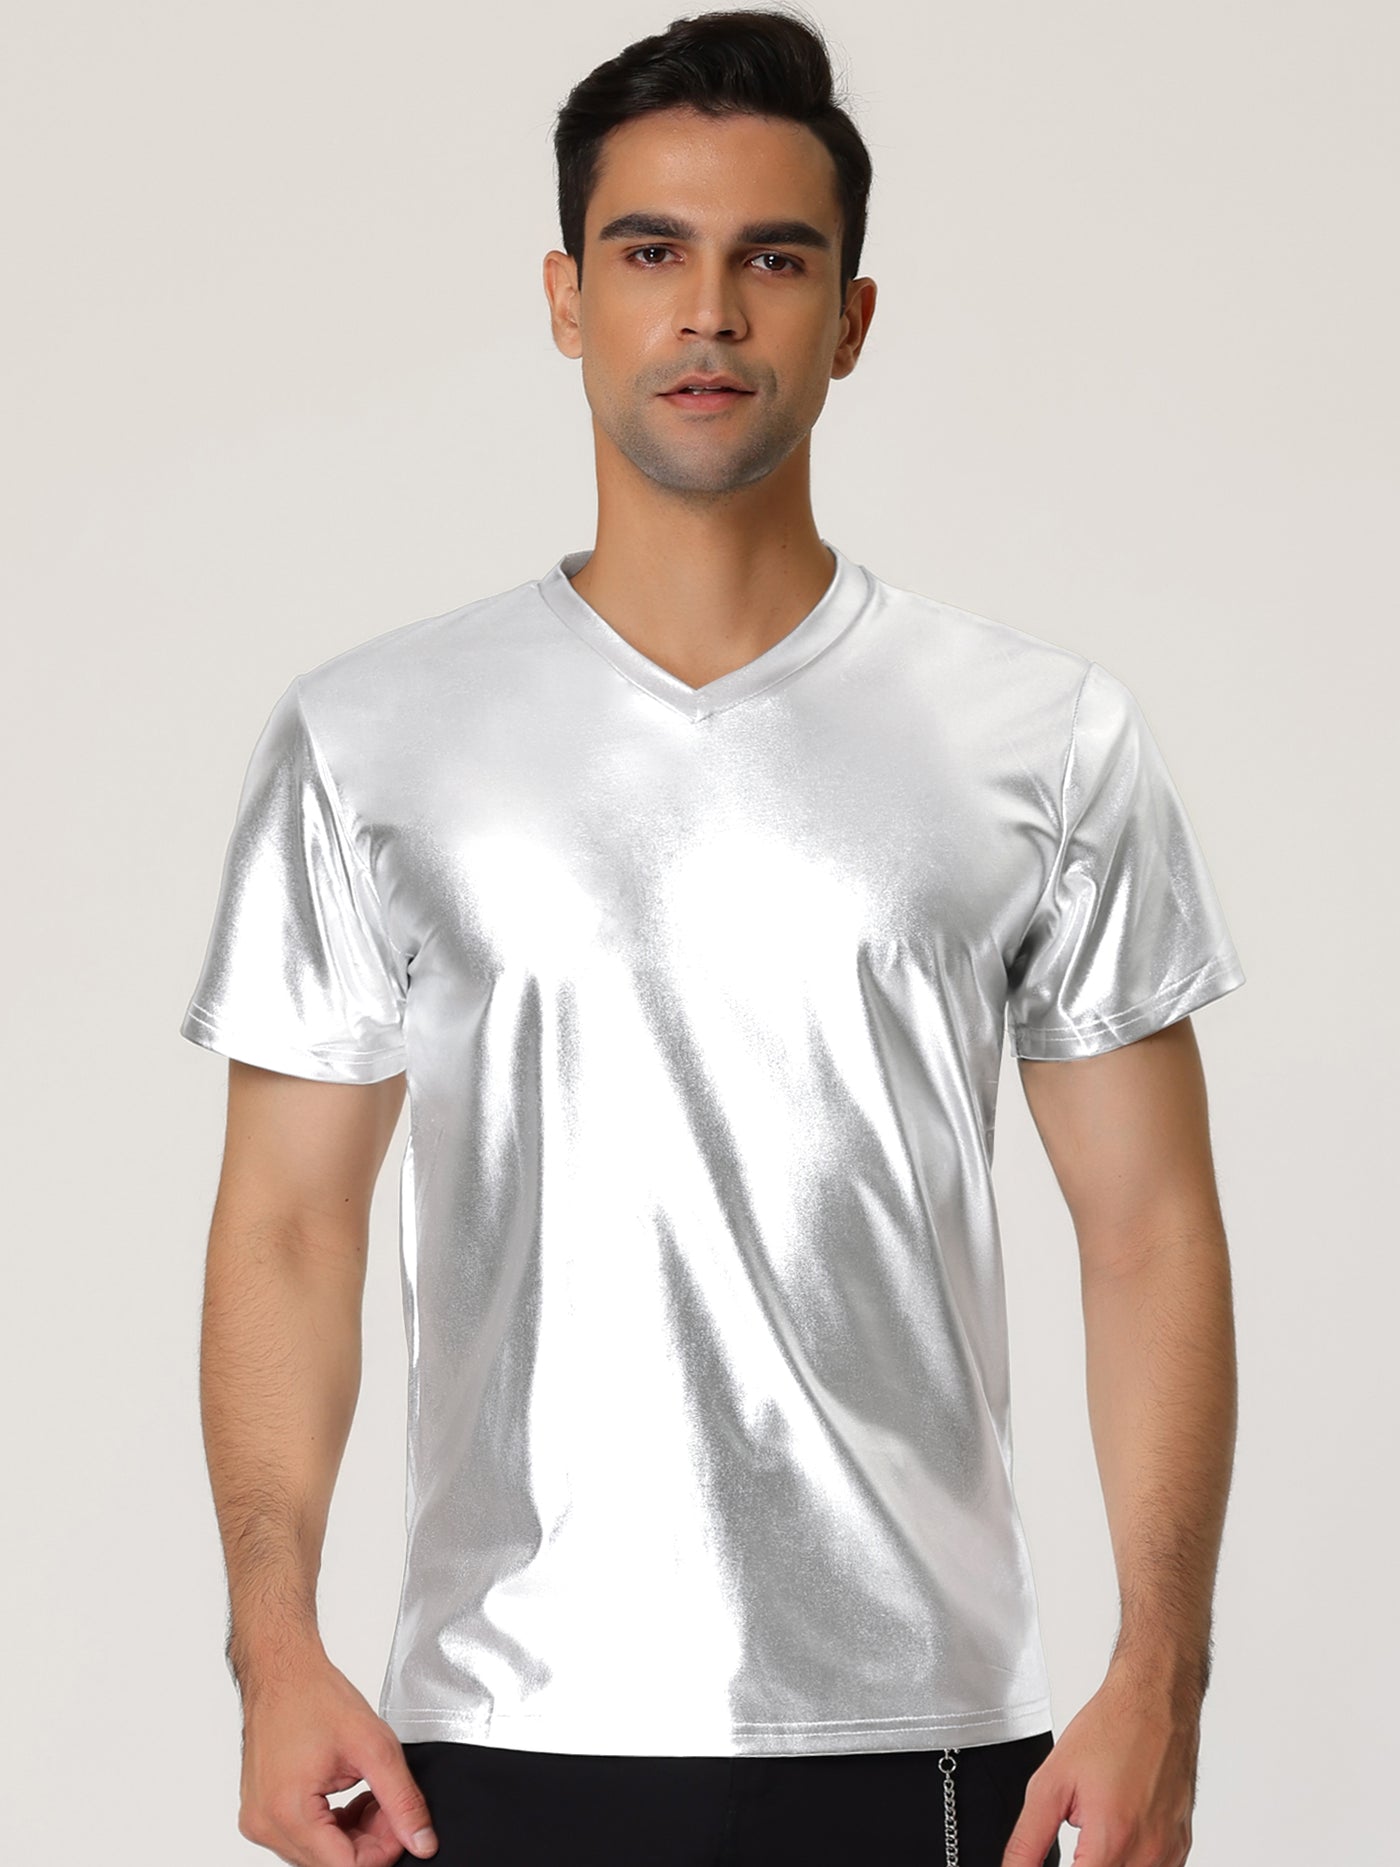 Bublédon Metallic Shiny V Neck Short Sleeve Party T-Shirt